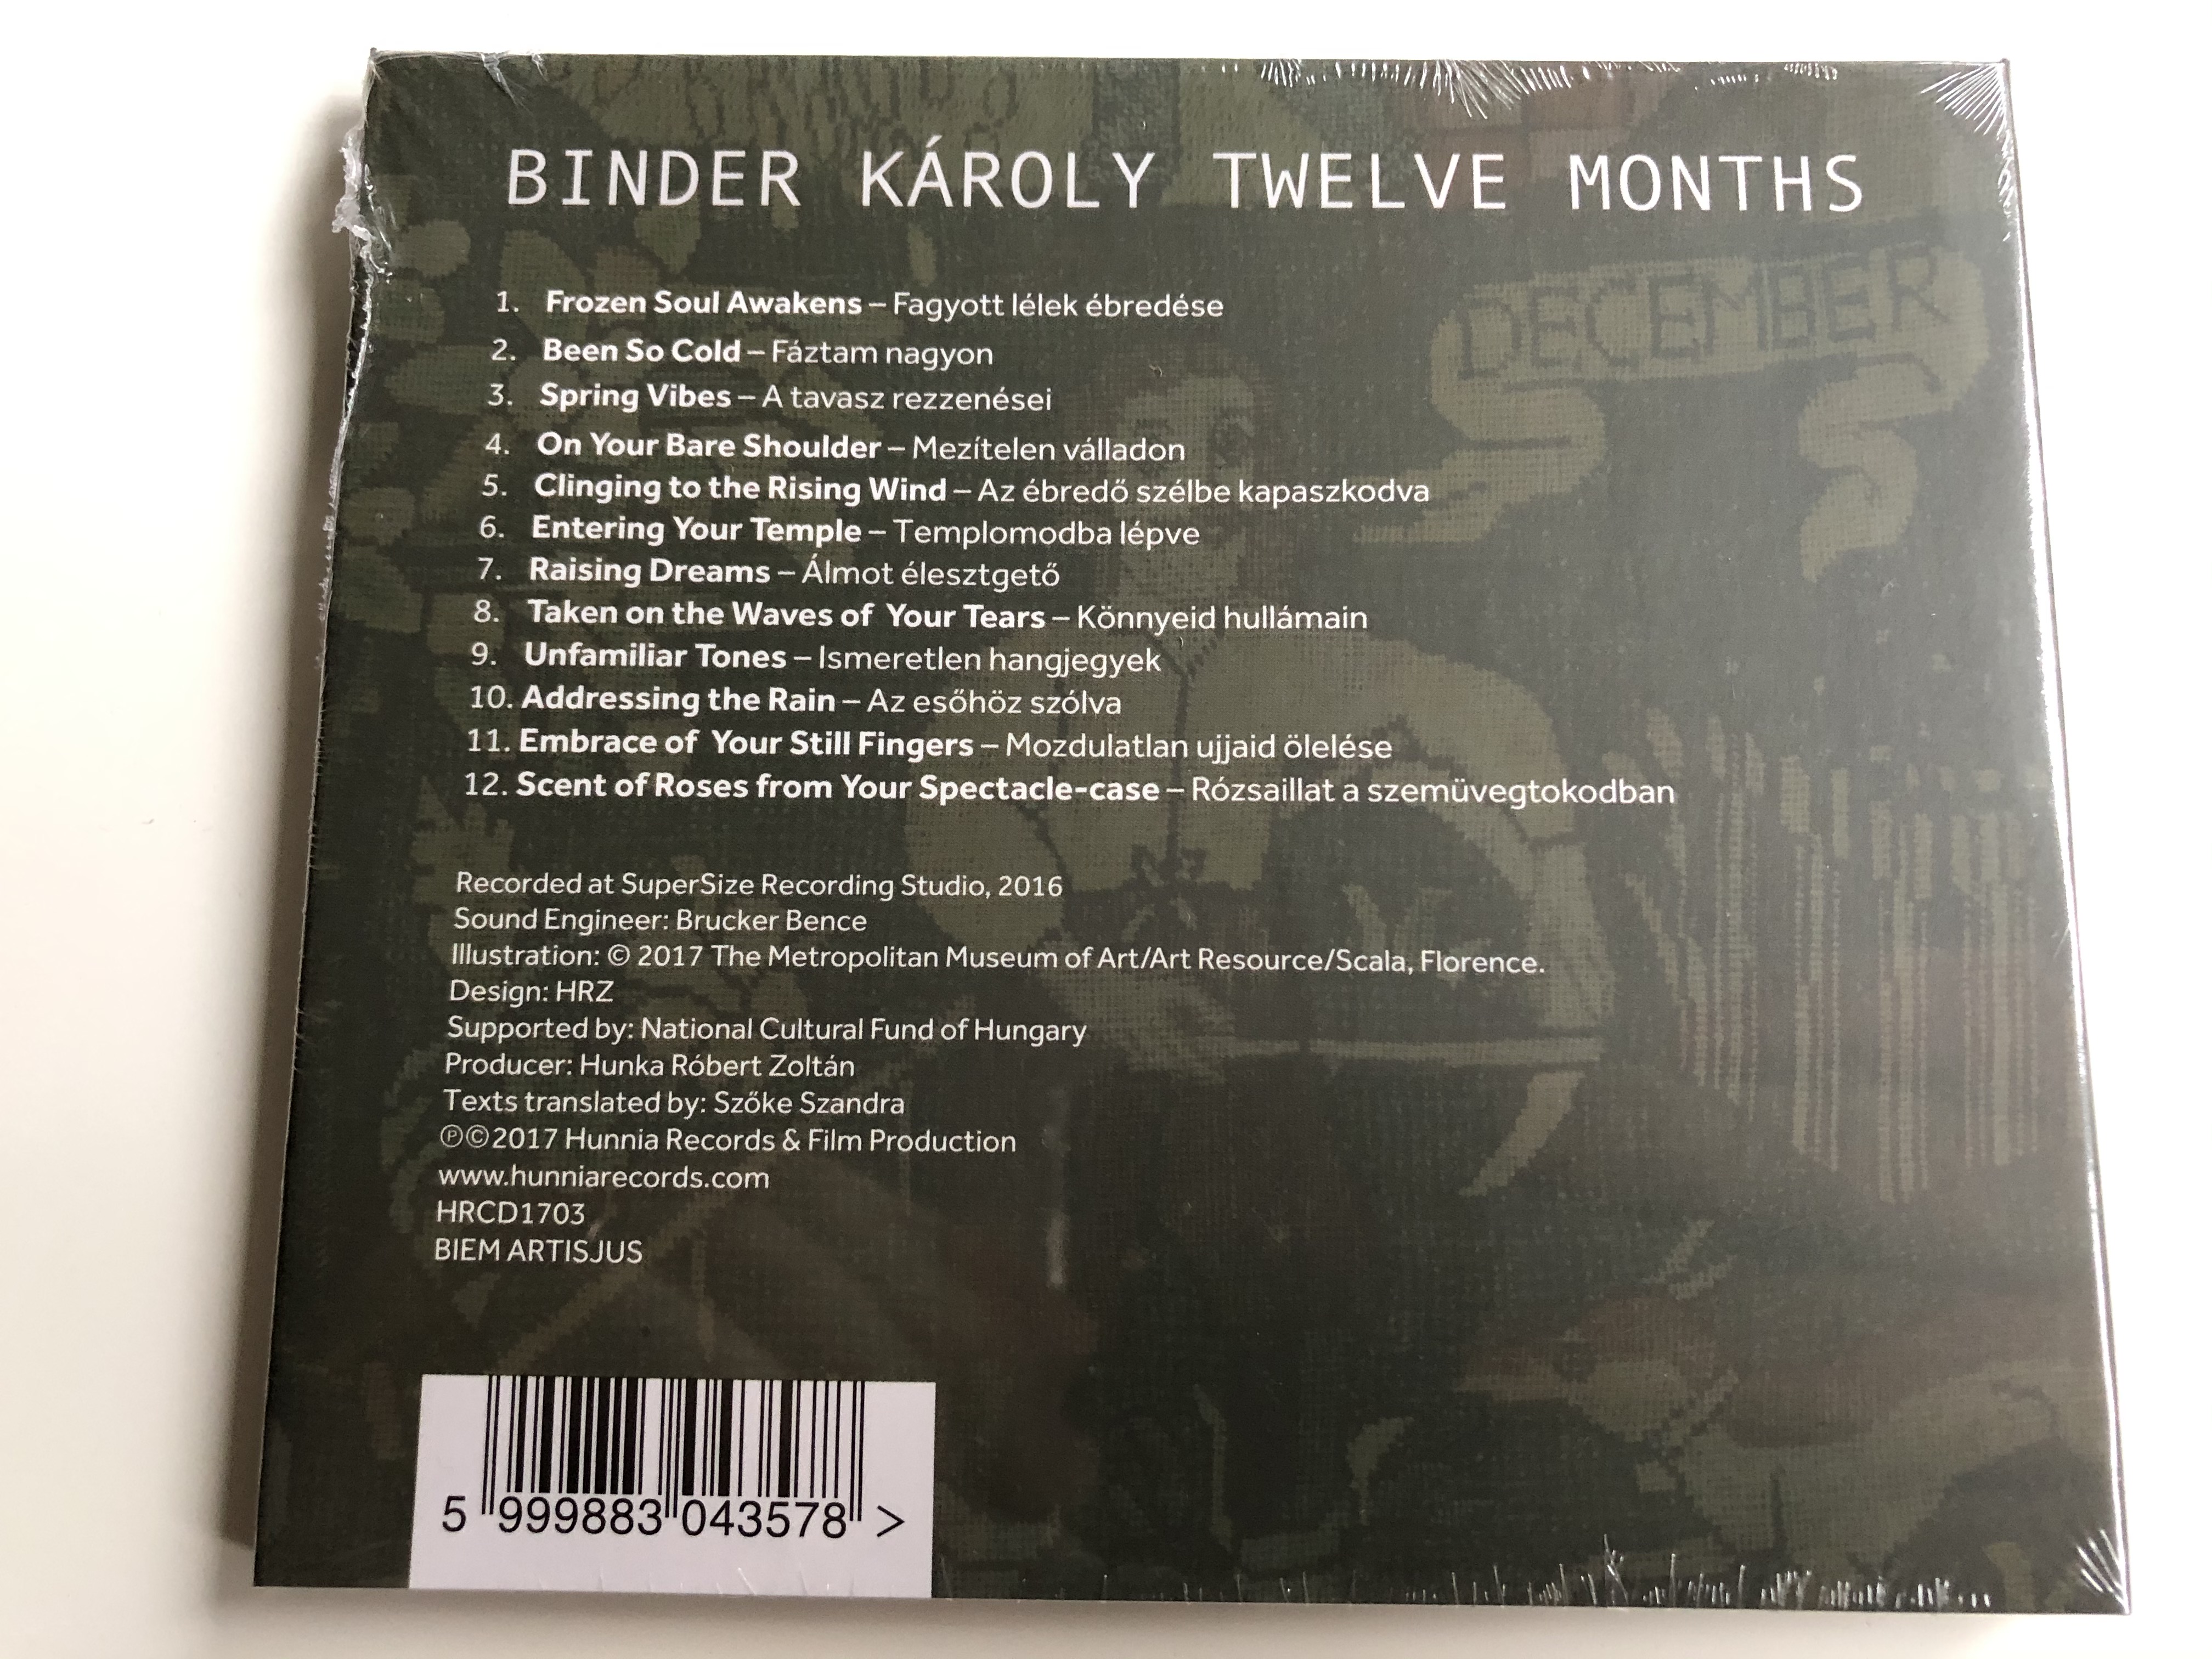 binder-karoly-twelve-months-hunnia-records-film-production-audio-cd-2017-hrcd1703-2-.jpg